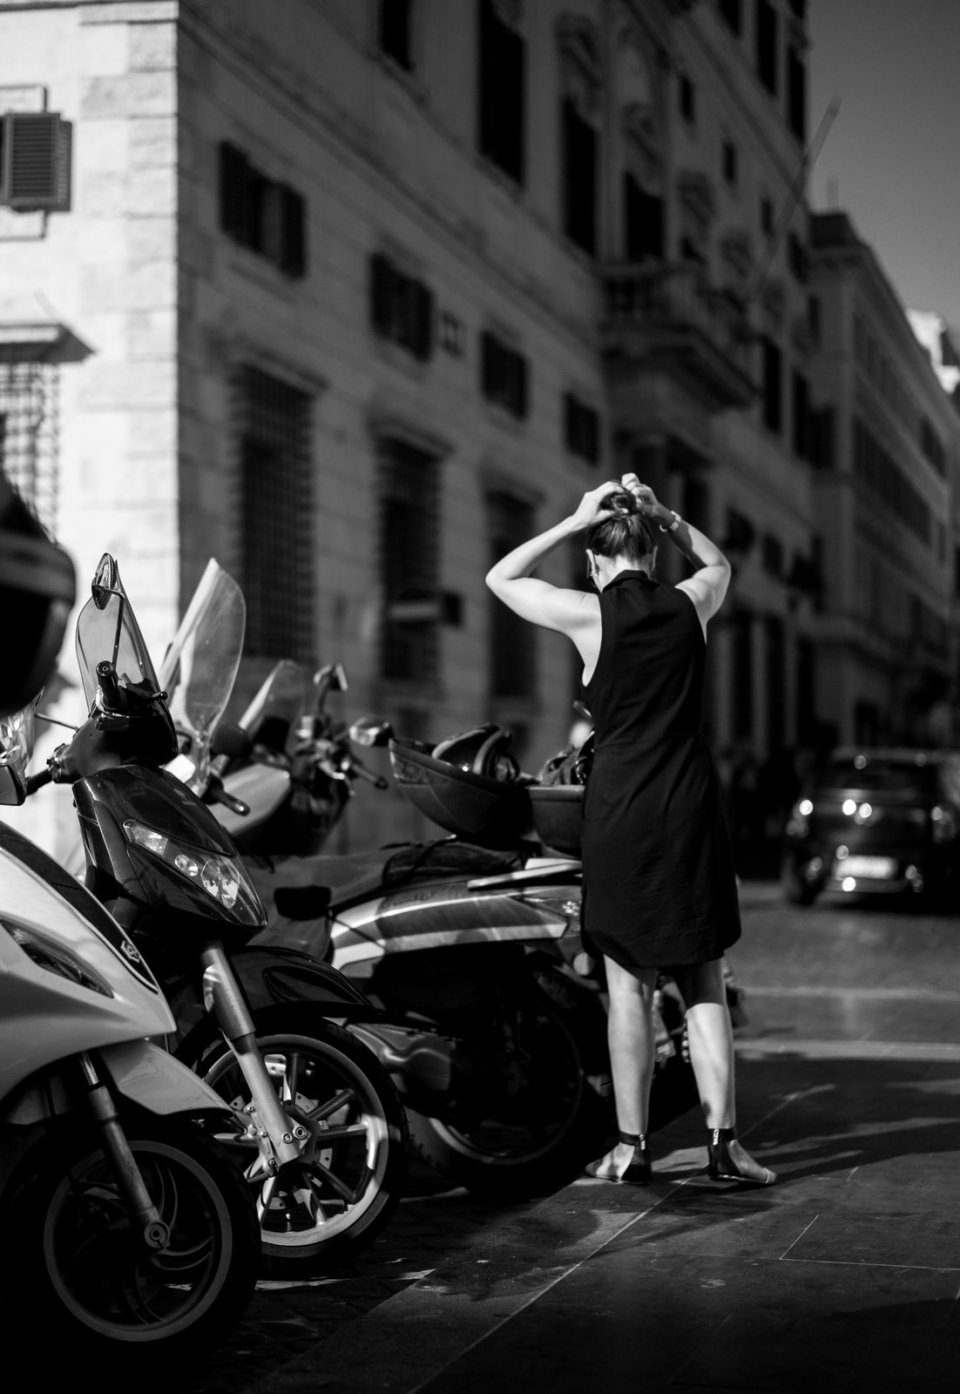 Woman in Rome. (C) Morten Albek - 2015. photo@mortenalbek.com www.mortenalbek.com